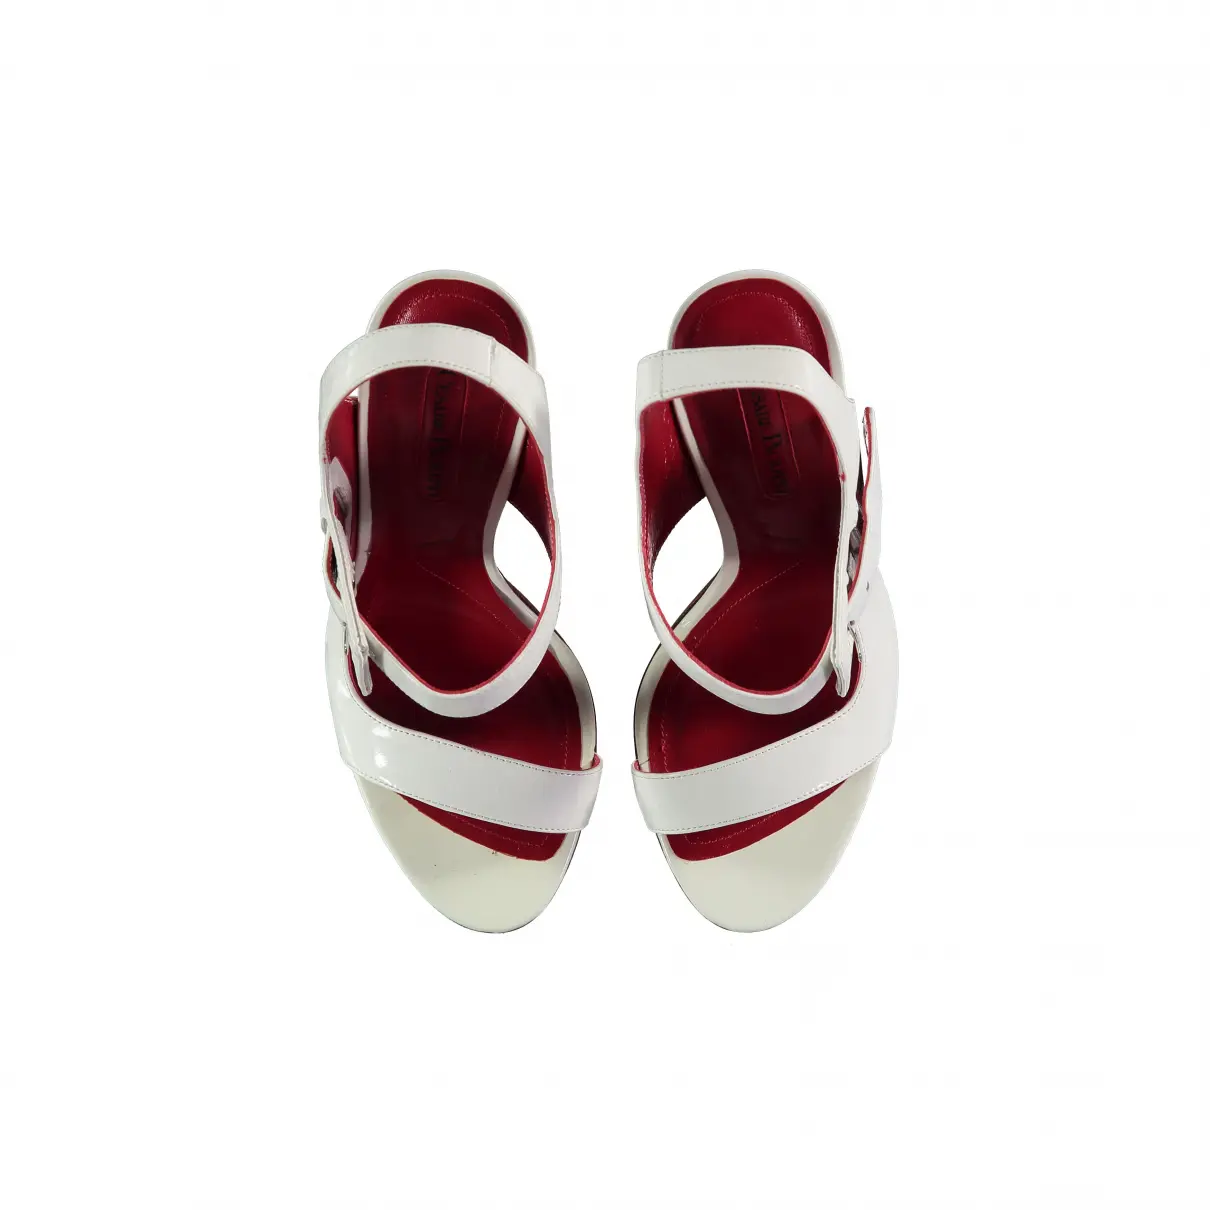 Buy Cesare Paciotti Leather sandals online